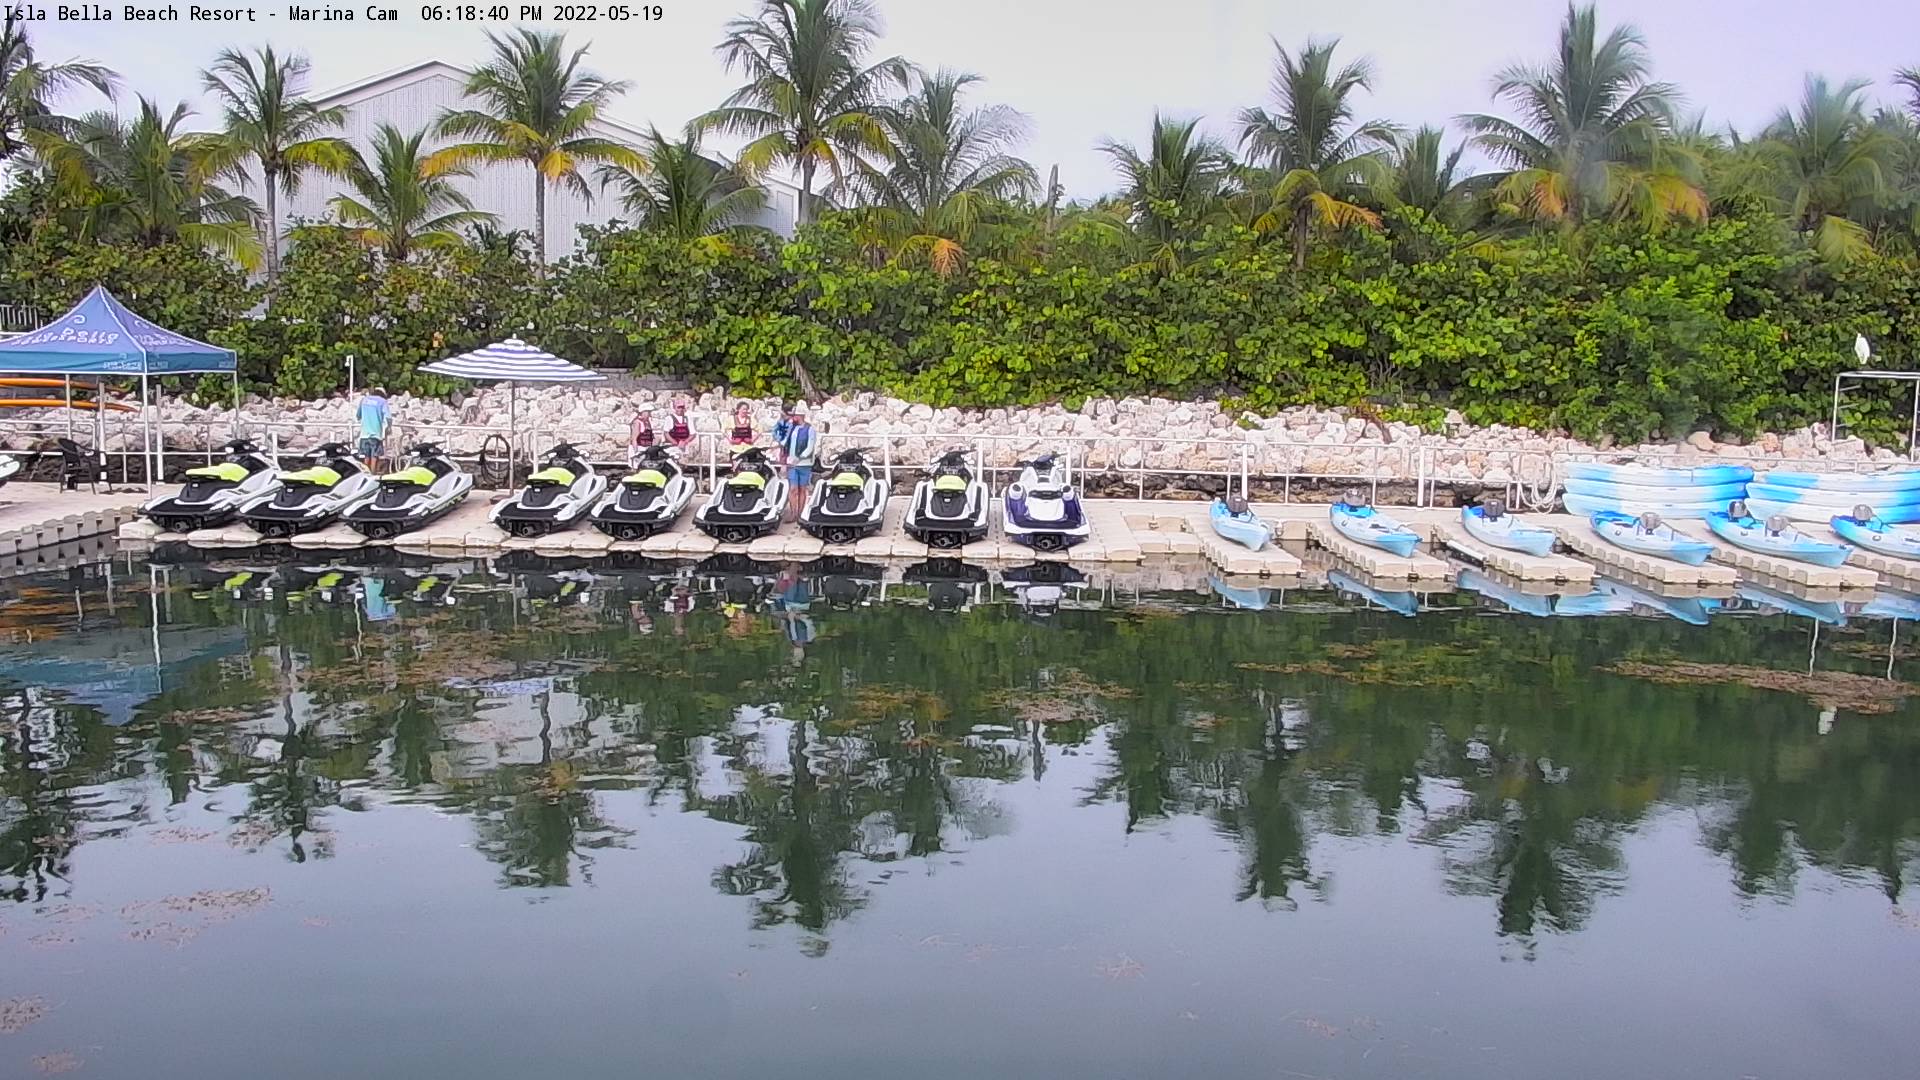 Isla Bella Beach Resort: Marina Cam - Florida Keys () - Florida  - Andro Smart Cameras